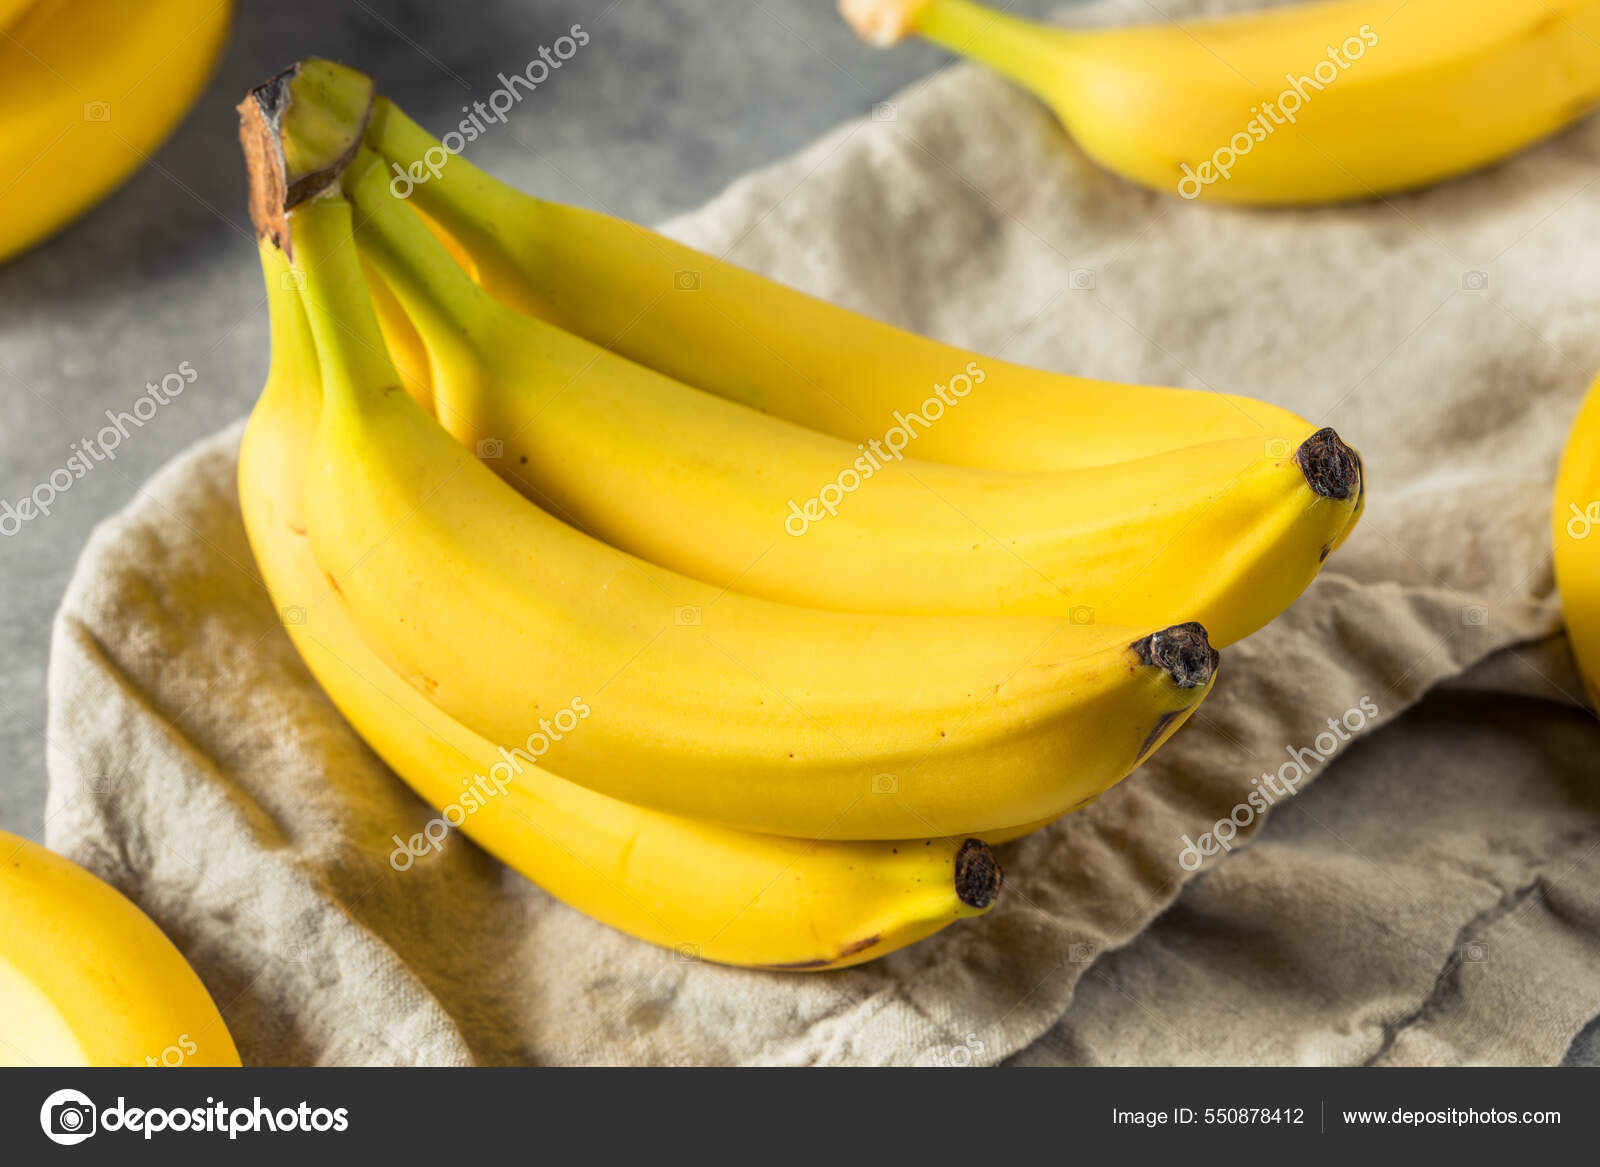 https://st.depositphotos.com/1692343/55087/i/1600/depositphotos_550878412-stock-photo-organic-raw-yellow-banana-bunch.jpg